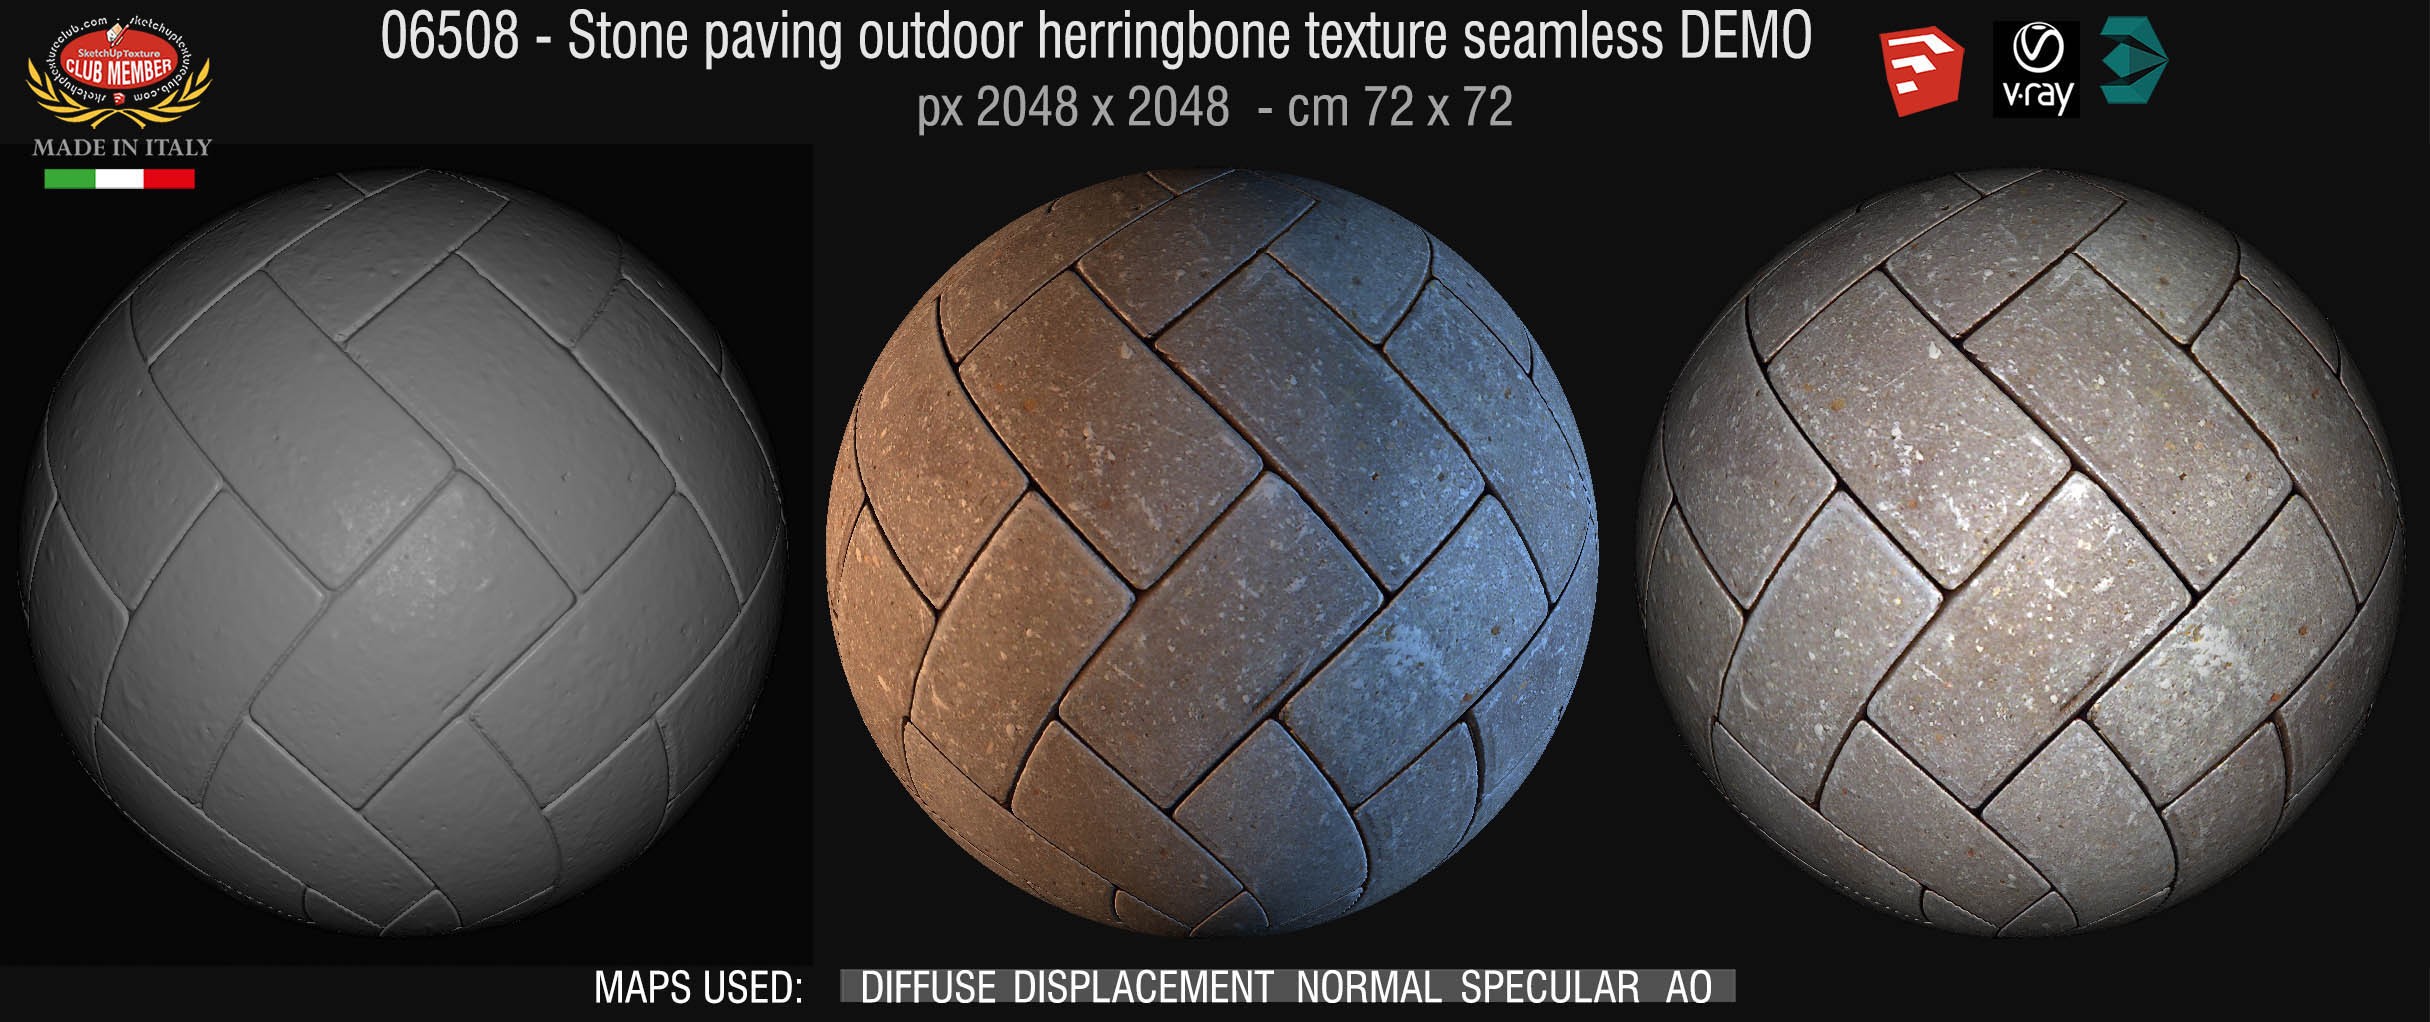 06508 Stone paving outdoor herringbone texture seamless + maps DEMO